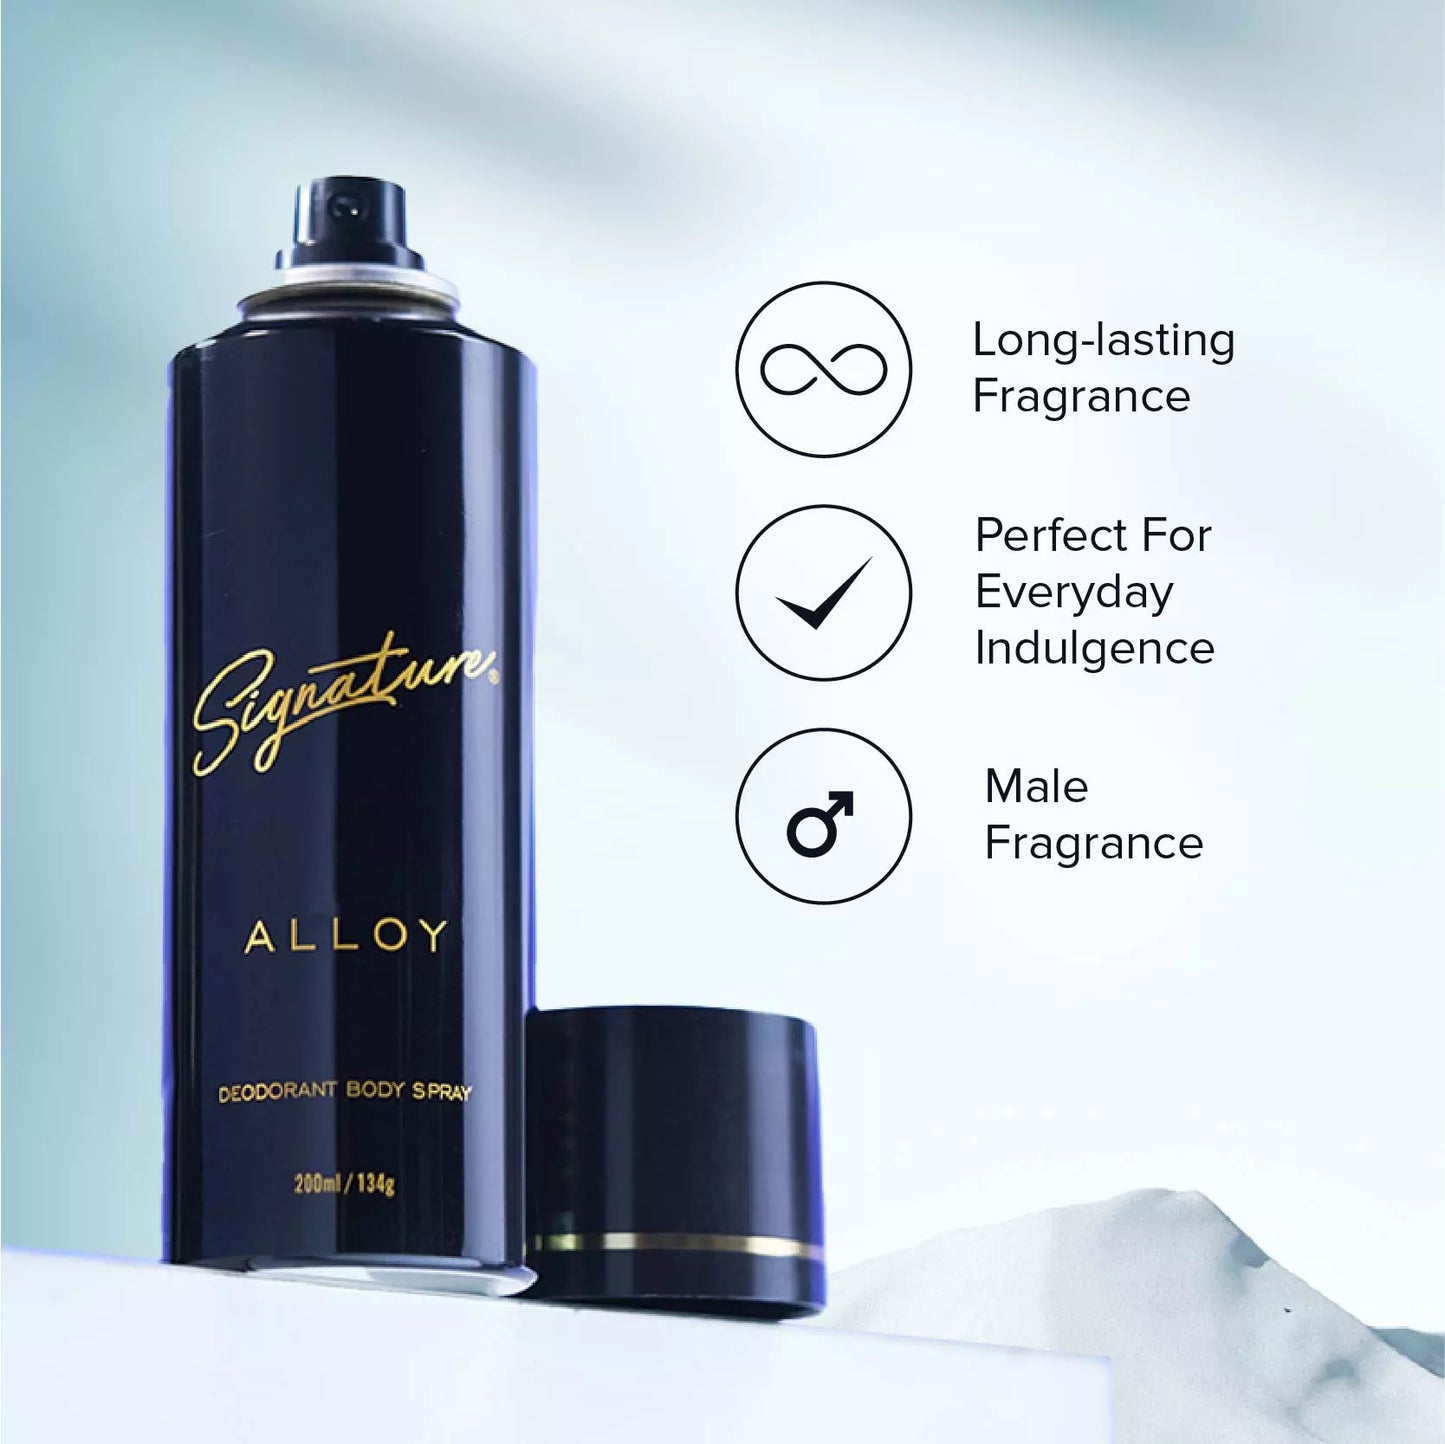 Signature Perfume Body Spray - "ALLOY" - 200 ML